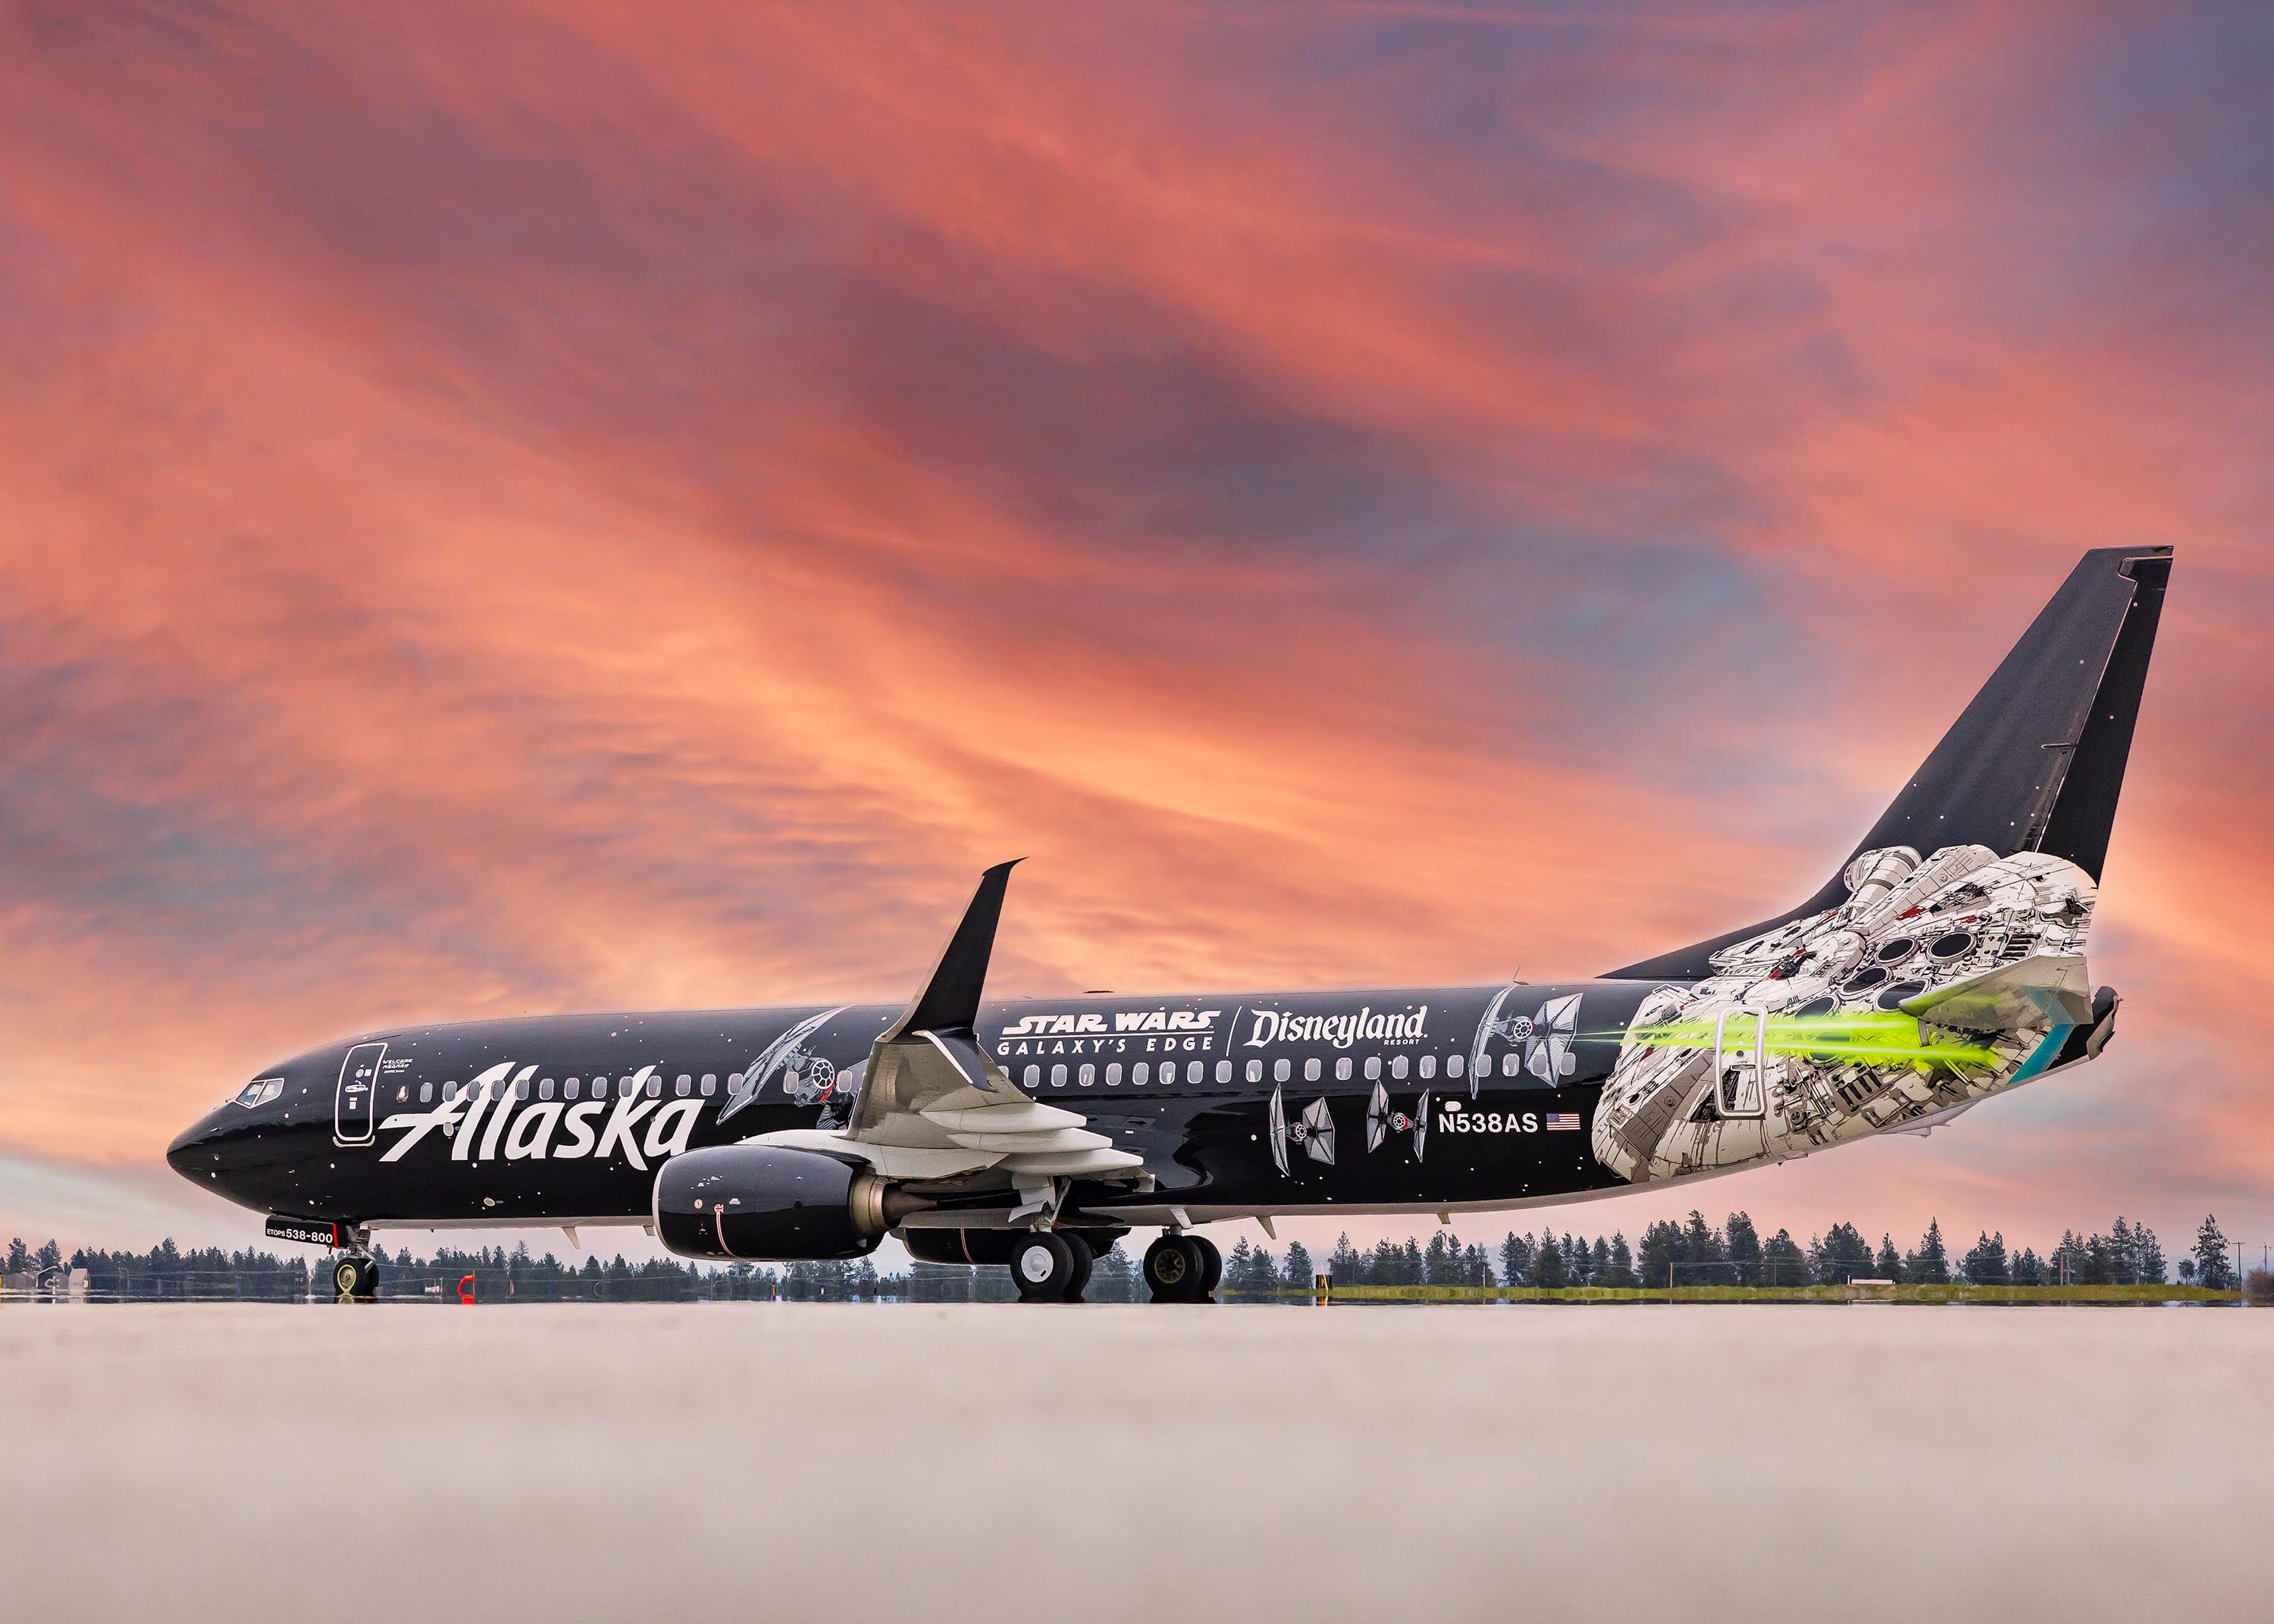 Alaska Airlines: Star Wars Transport to the Disneyland Resort